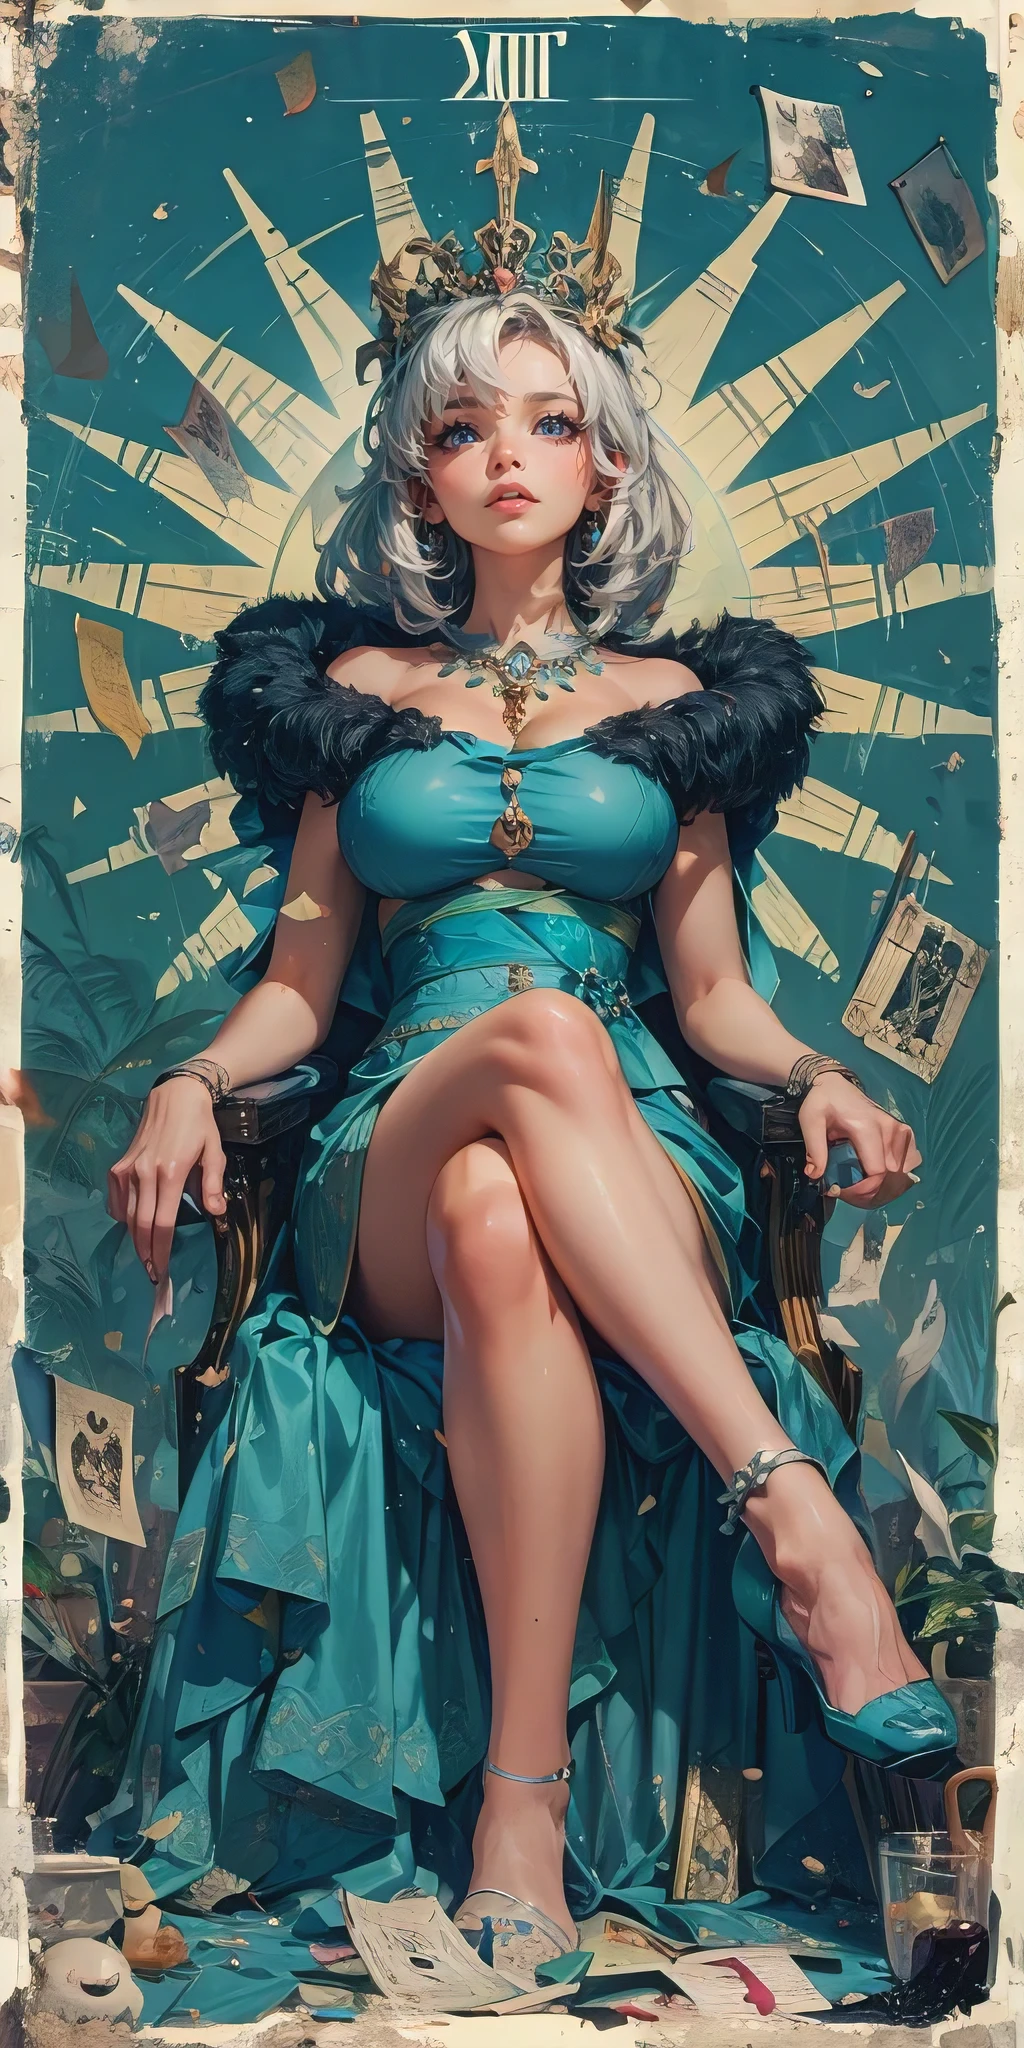 artgerm と kojima ayami によるタロットカードのイラスト, 皇后. ローマ数字 "13", 完璧なボディ, (巨大な胸, 胸の谷間:1.3), 超女性的な曲線, タロットの境界線, 神秘的な, 精巧な詳細